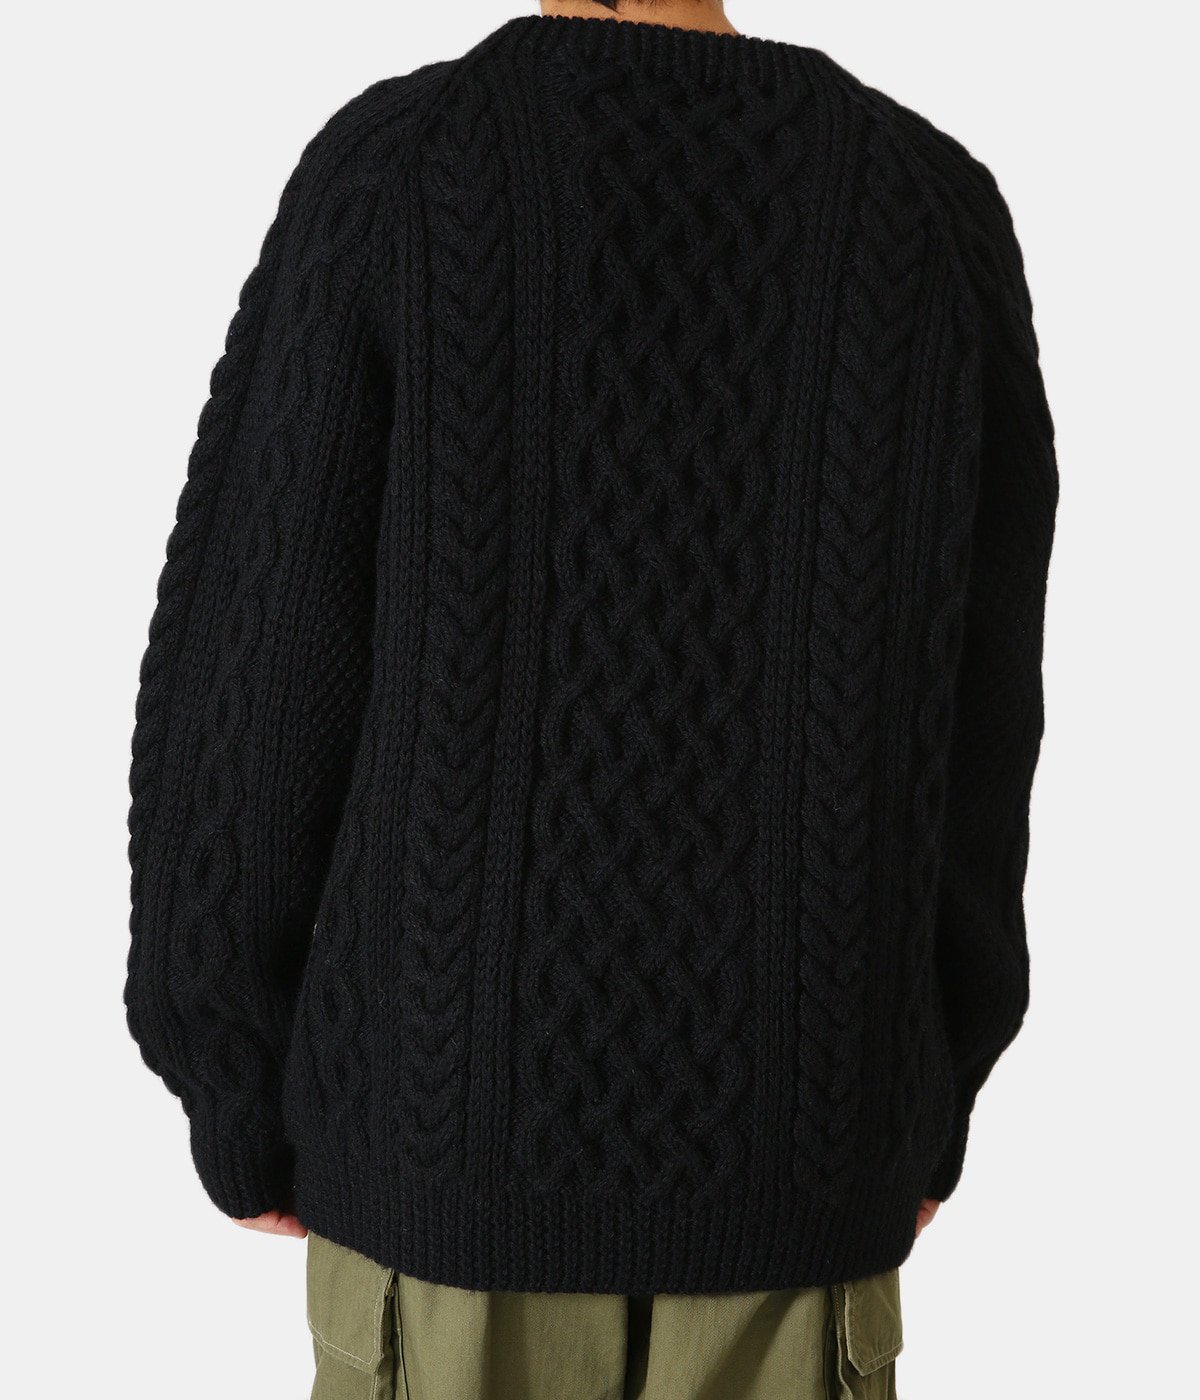 Crewneck Sweater (SIZE:48.50)